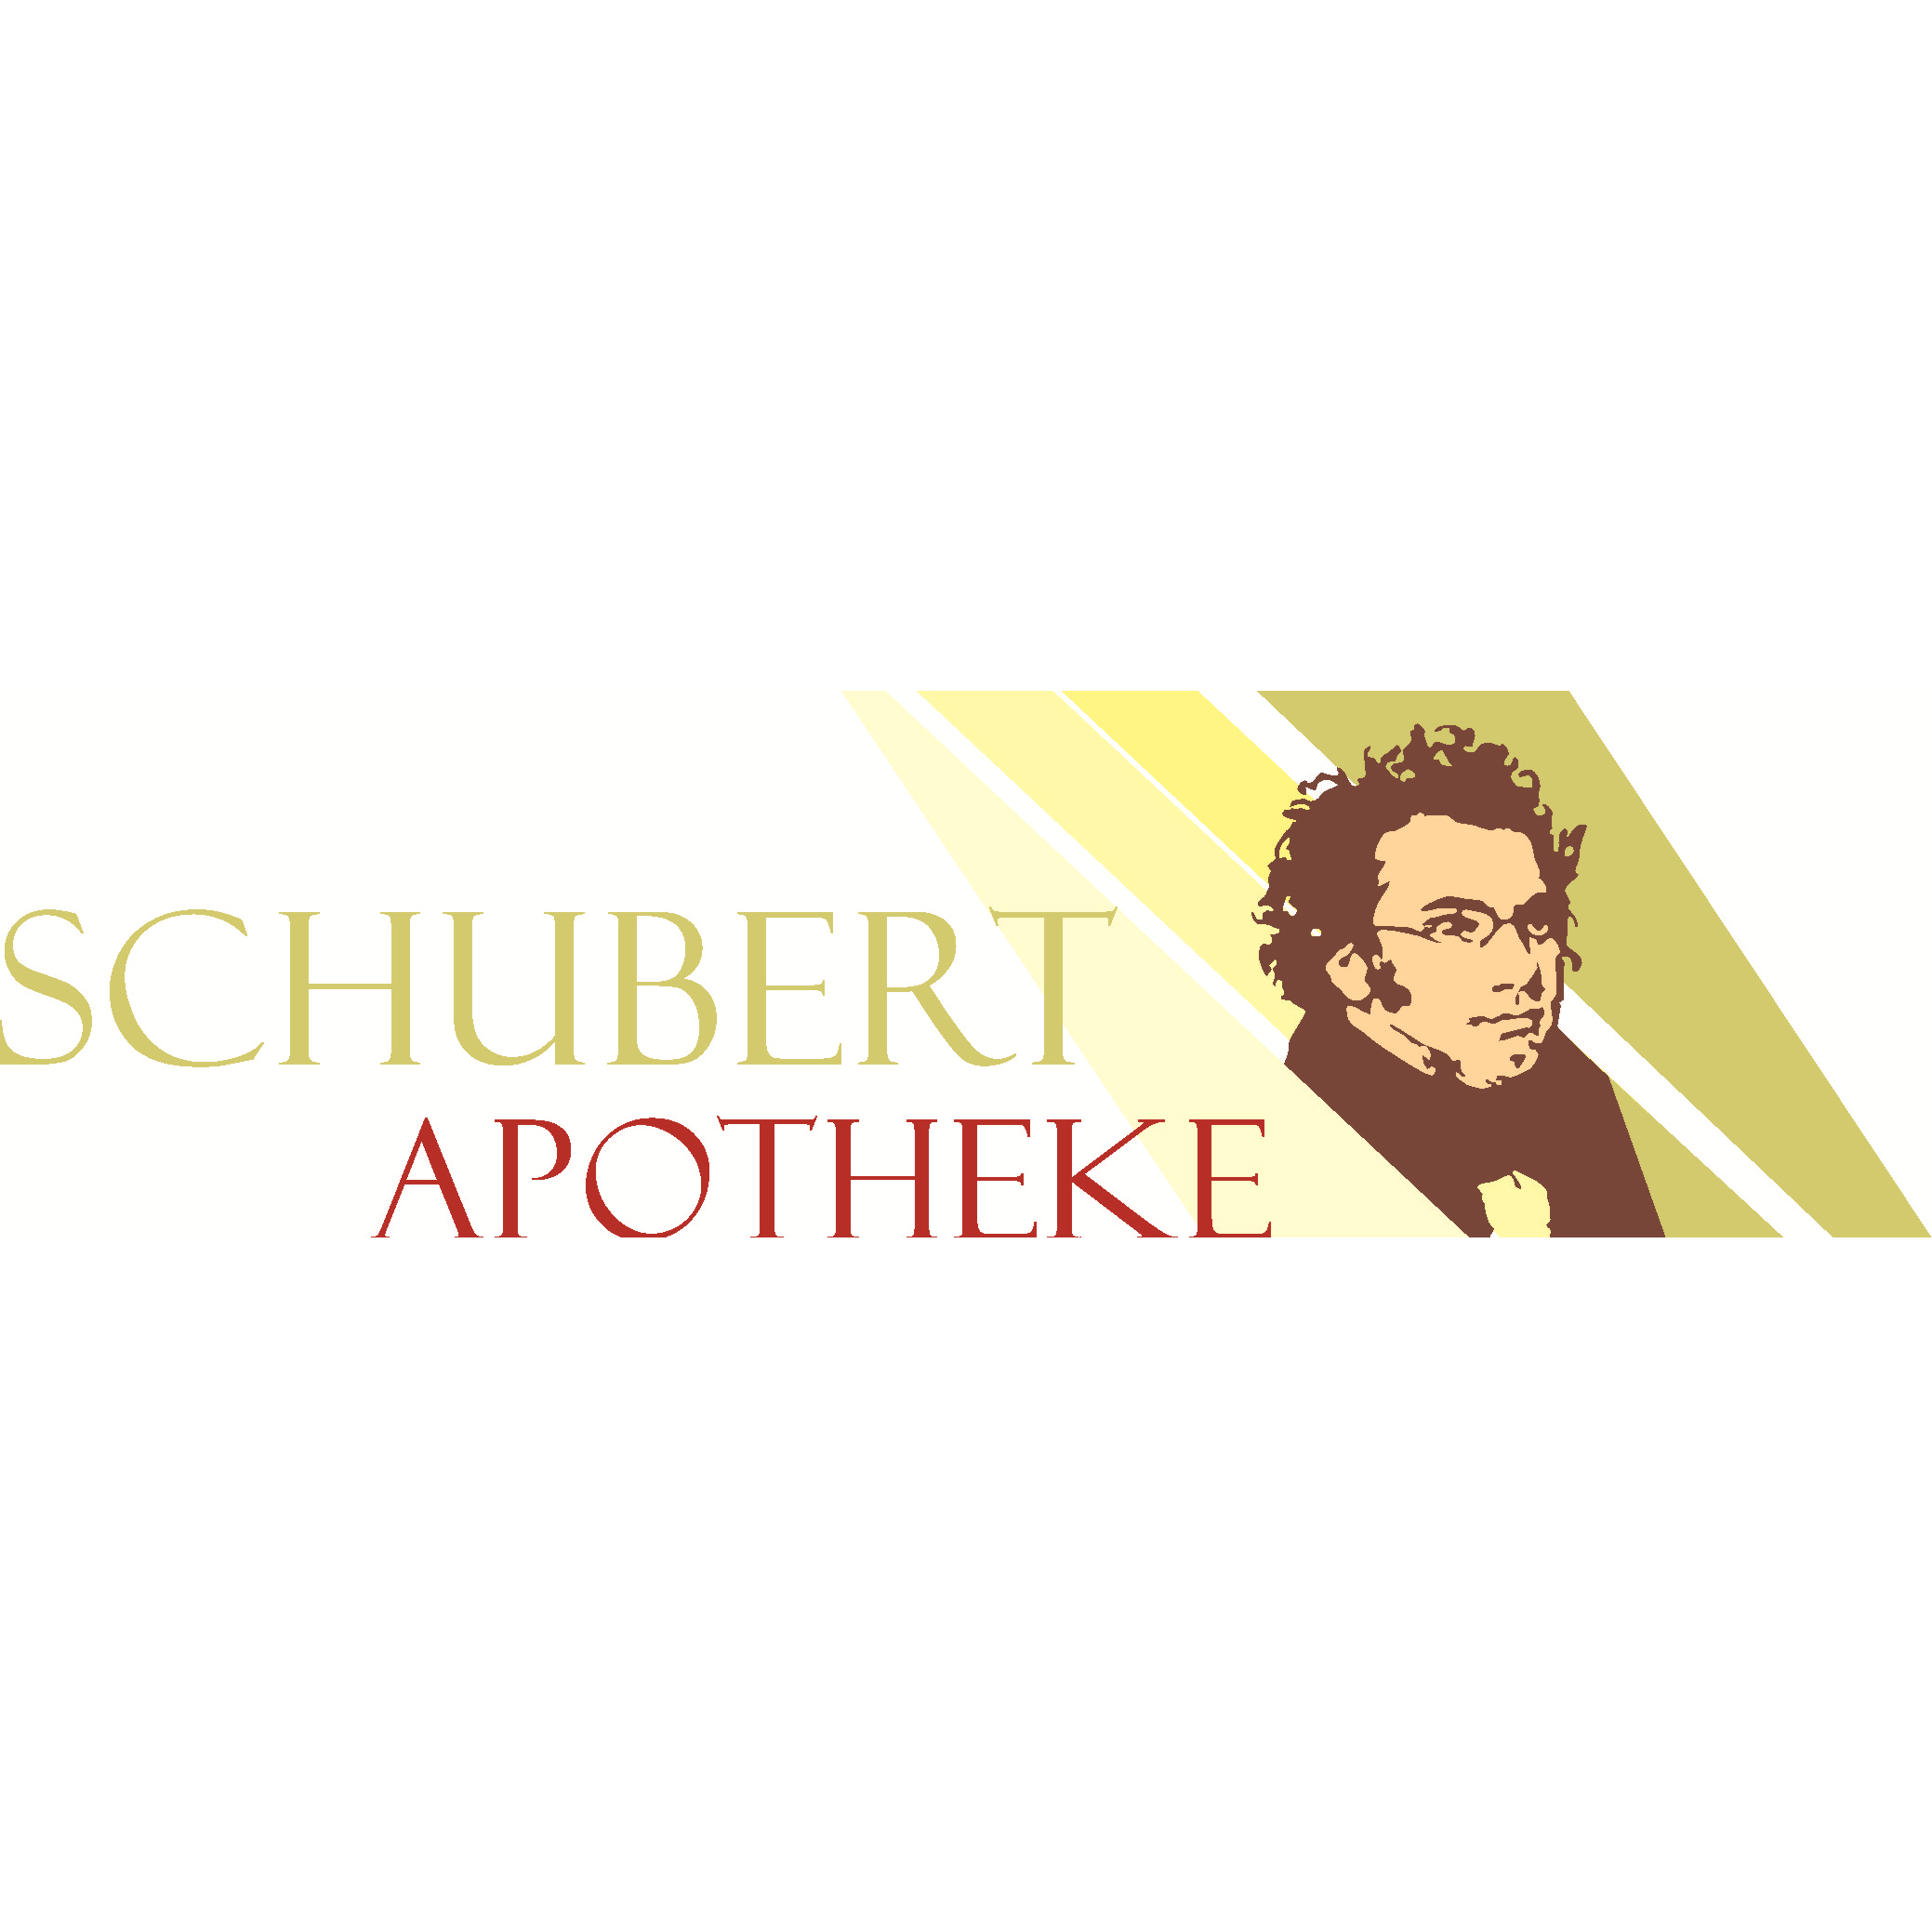 Schubert-Apotheke in Neu-Ulm - Logo